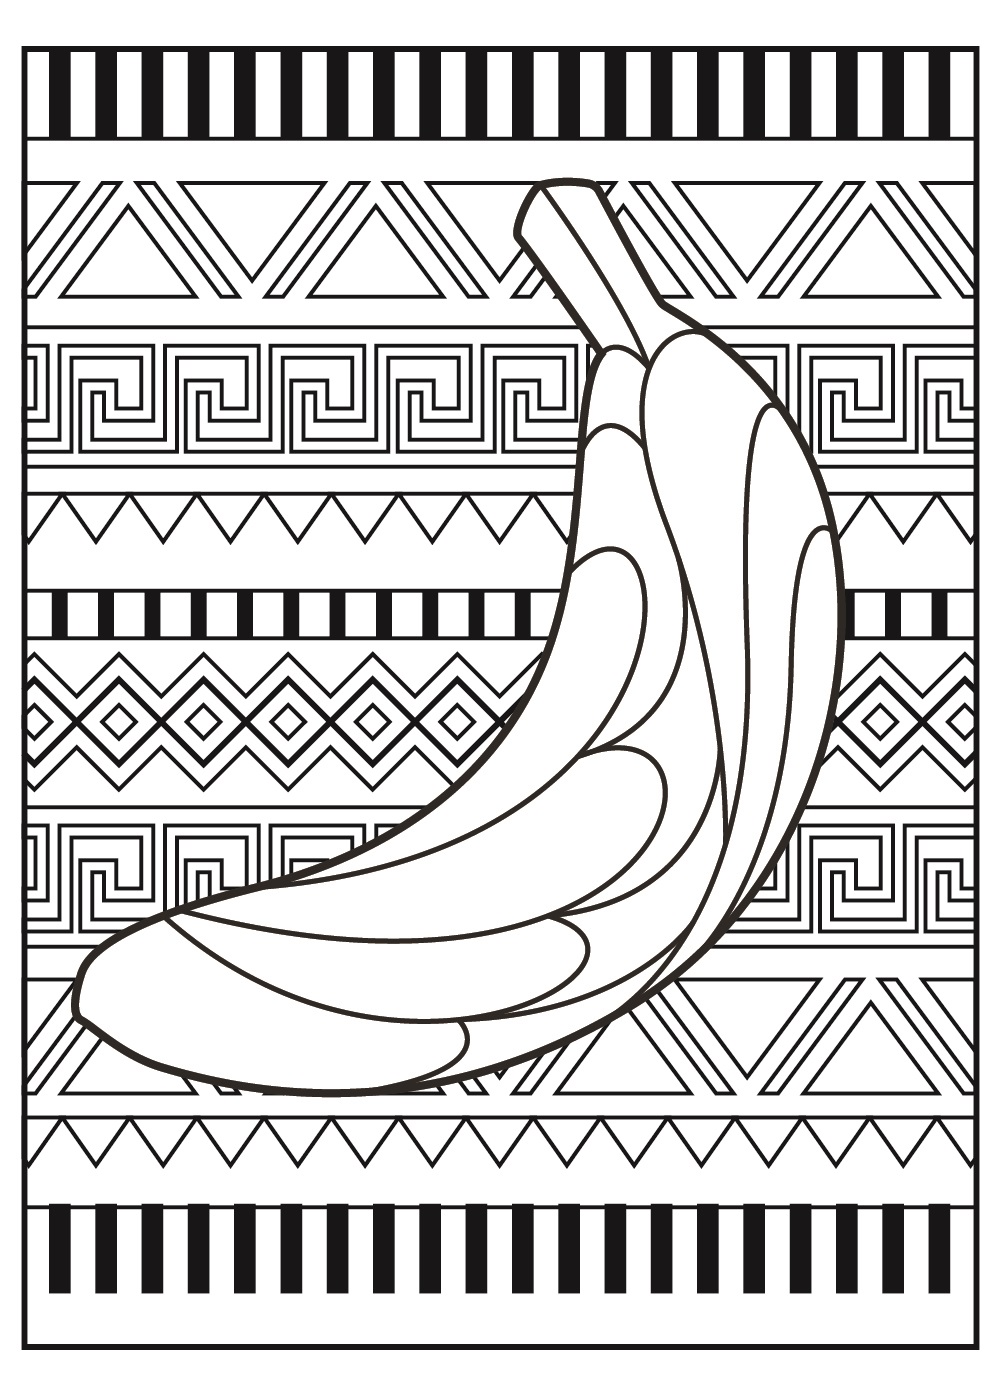 Cute Banana Image For Kids